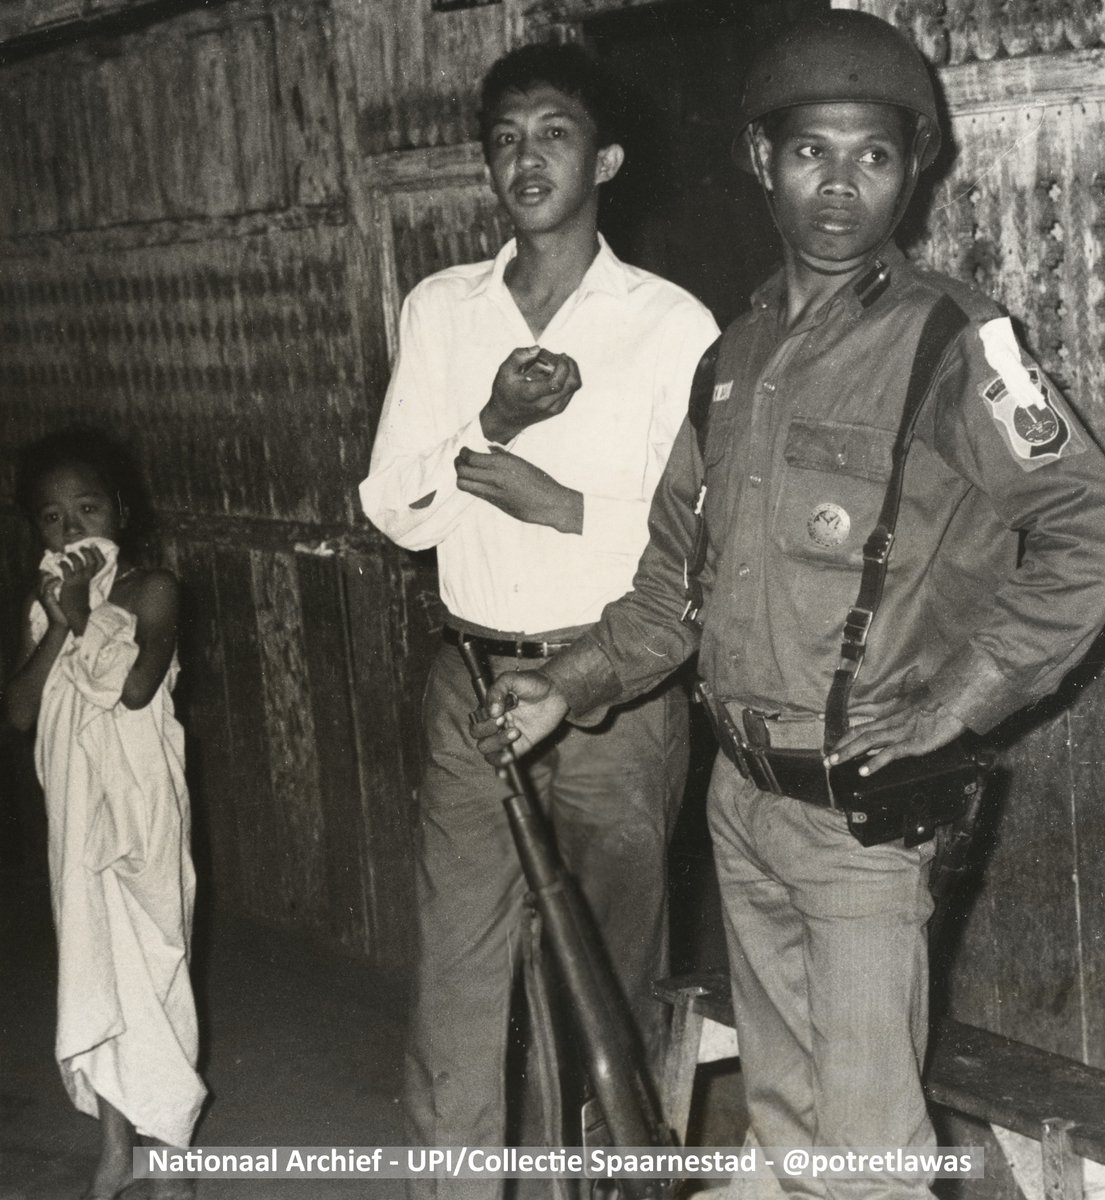 Persalinan terakhir. Pria ini masih sempat berganti baju saat dijemput tentara dari rumahnya di Jakarta, 14 Oktober 1965.

Beratus ribu orang diduga komunis diambil pada masa ini, tanpa tahu sebab dan akan diapakan. Sebagian besarnya dibui atau dibunuh, tanpa proses pengadilan.